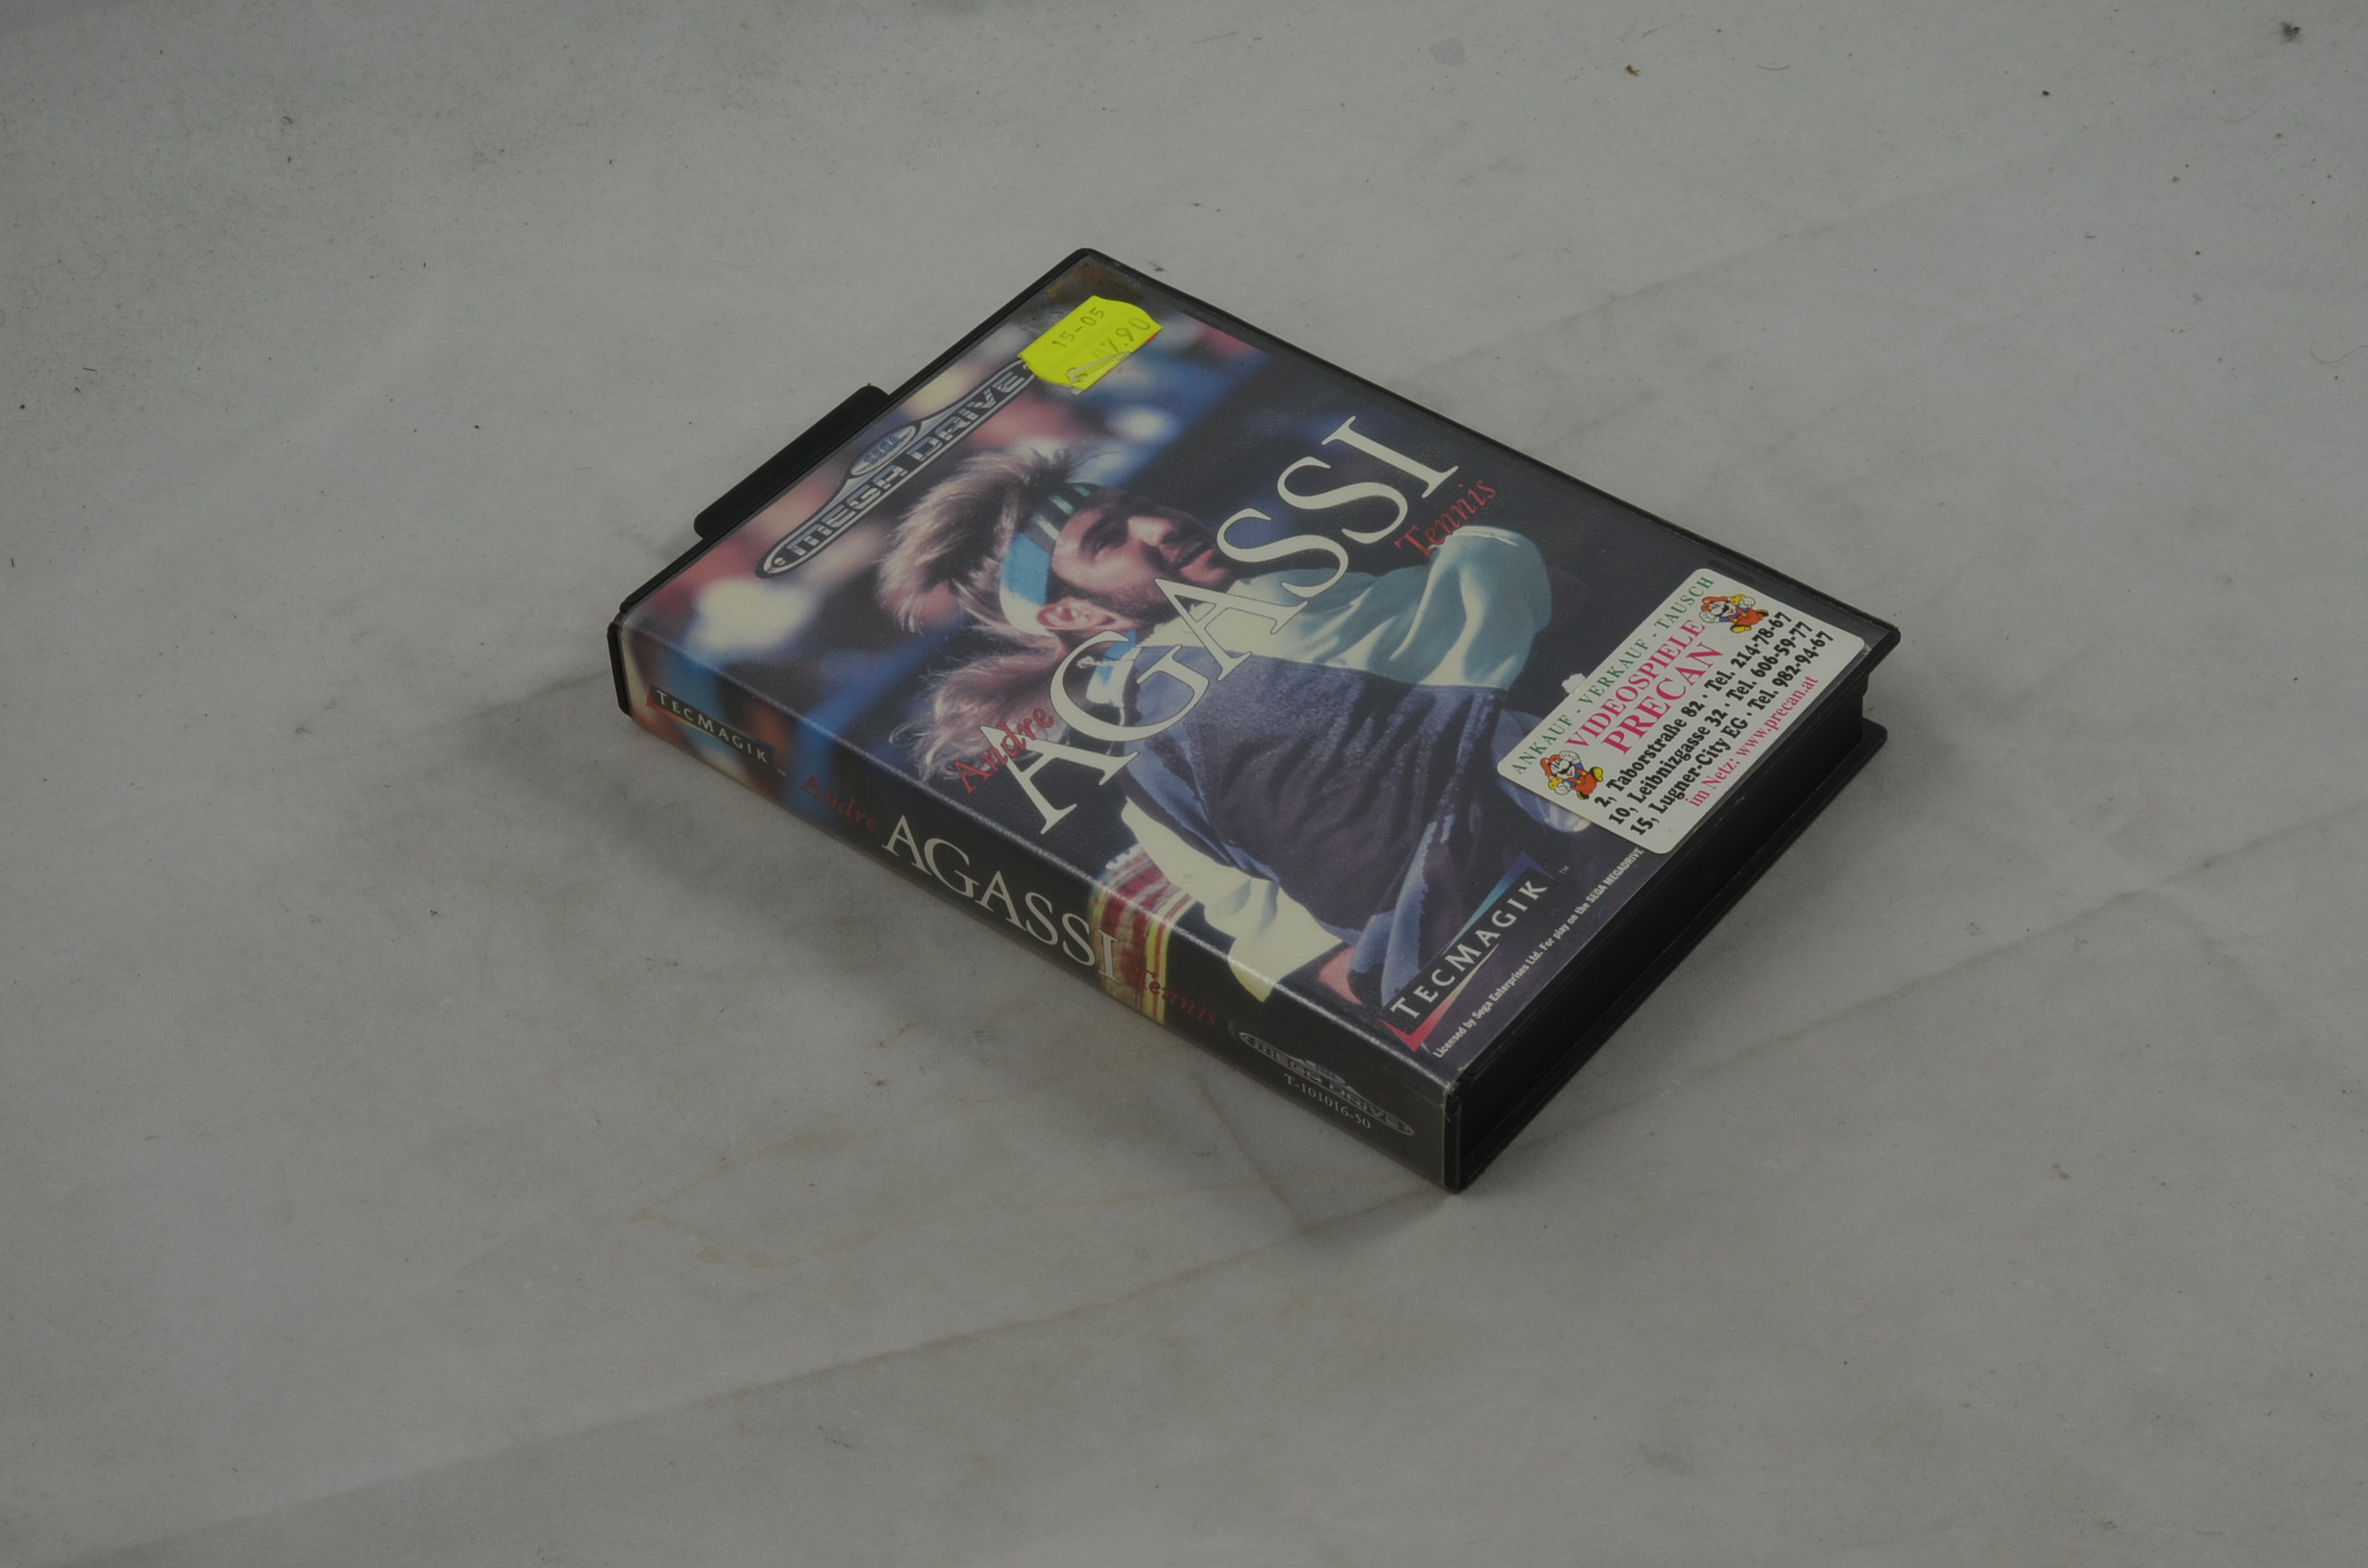 Produktbild von Andre Agassi Tennis Sega Mega Drive Spiel CIB (gut)